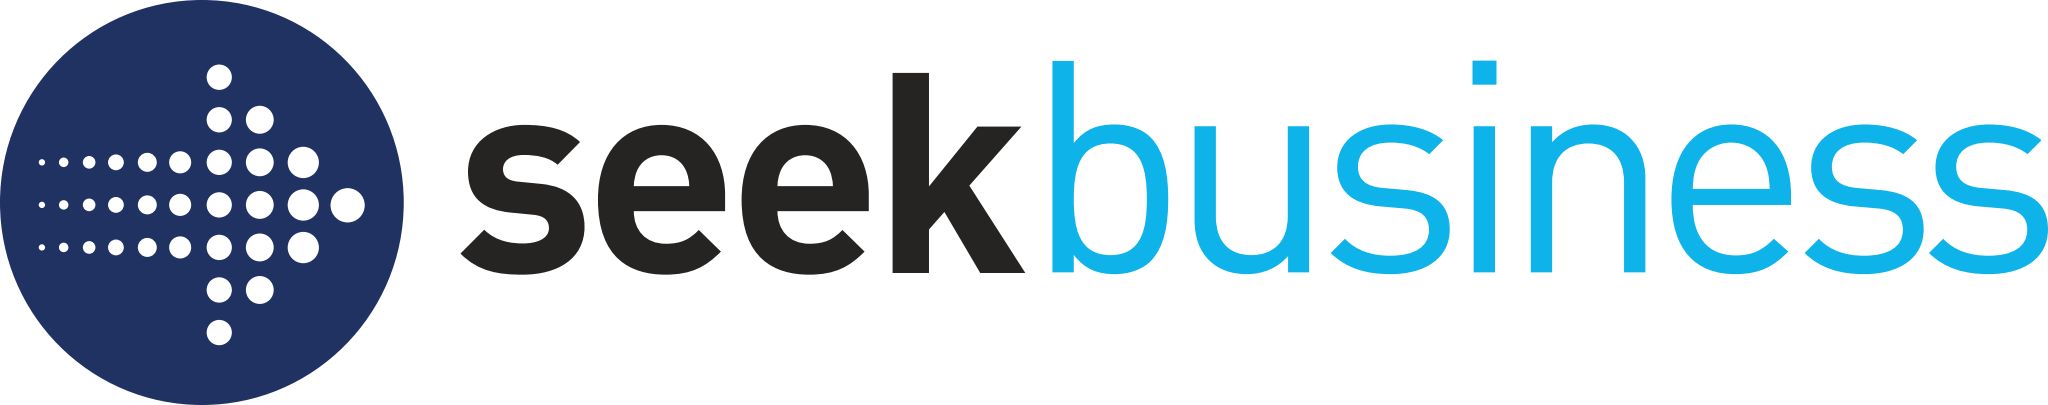 seek business logo 2